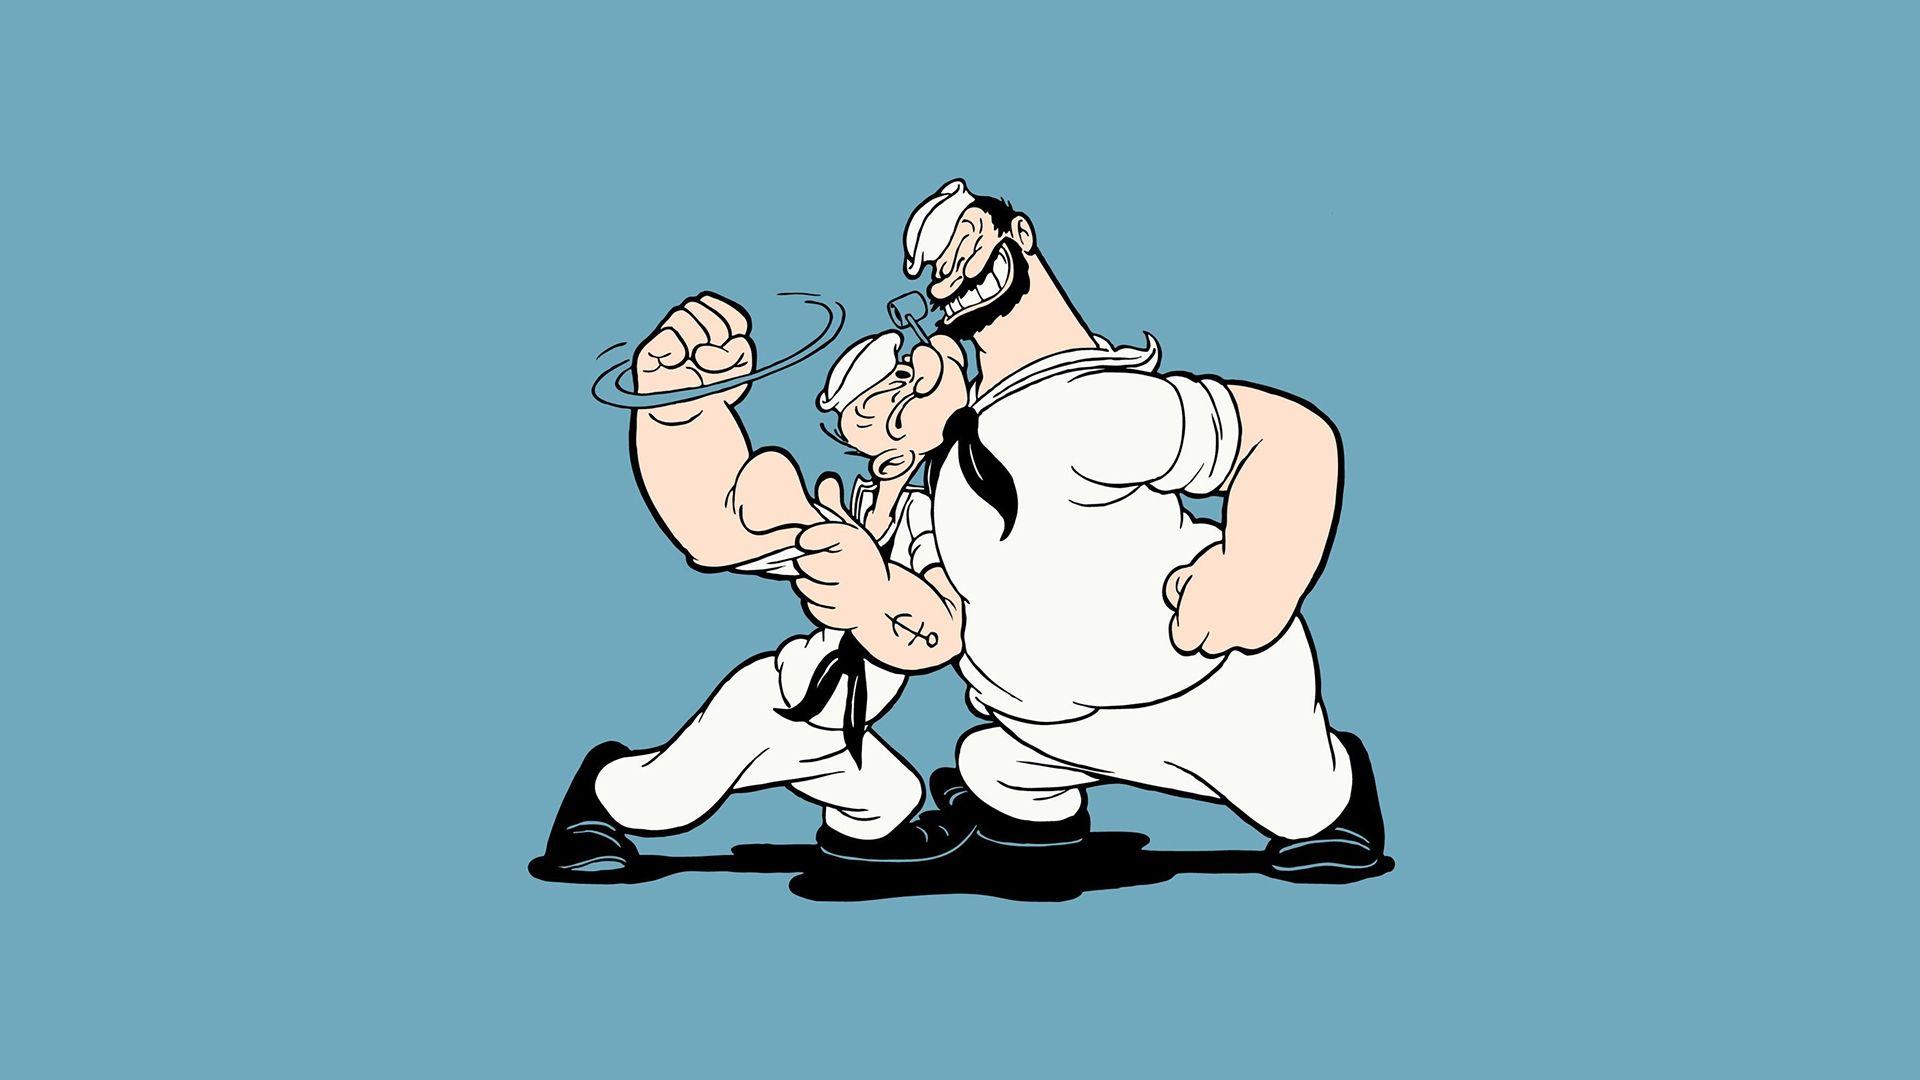 Popeye Sailor Man Full Hd Wallpapers Pf Cartoon Of Mobile High